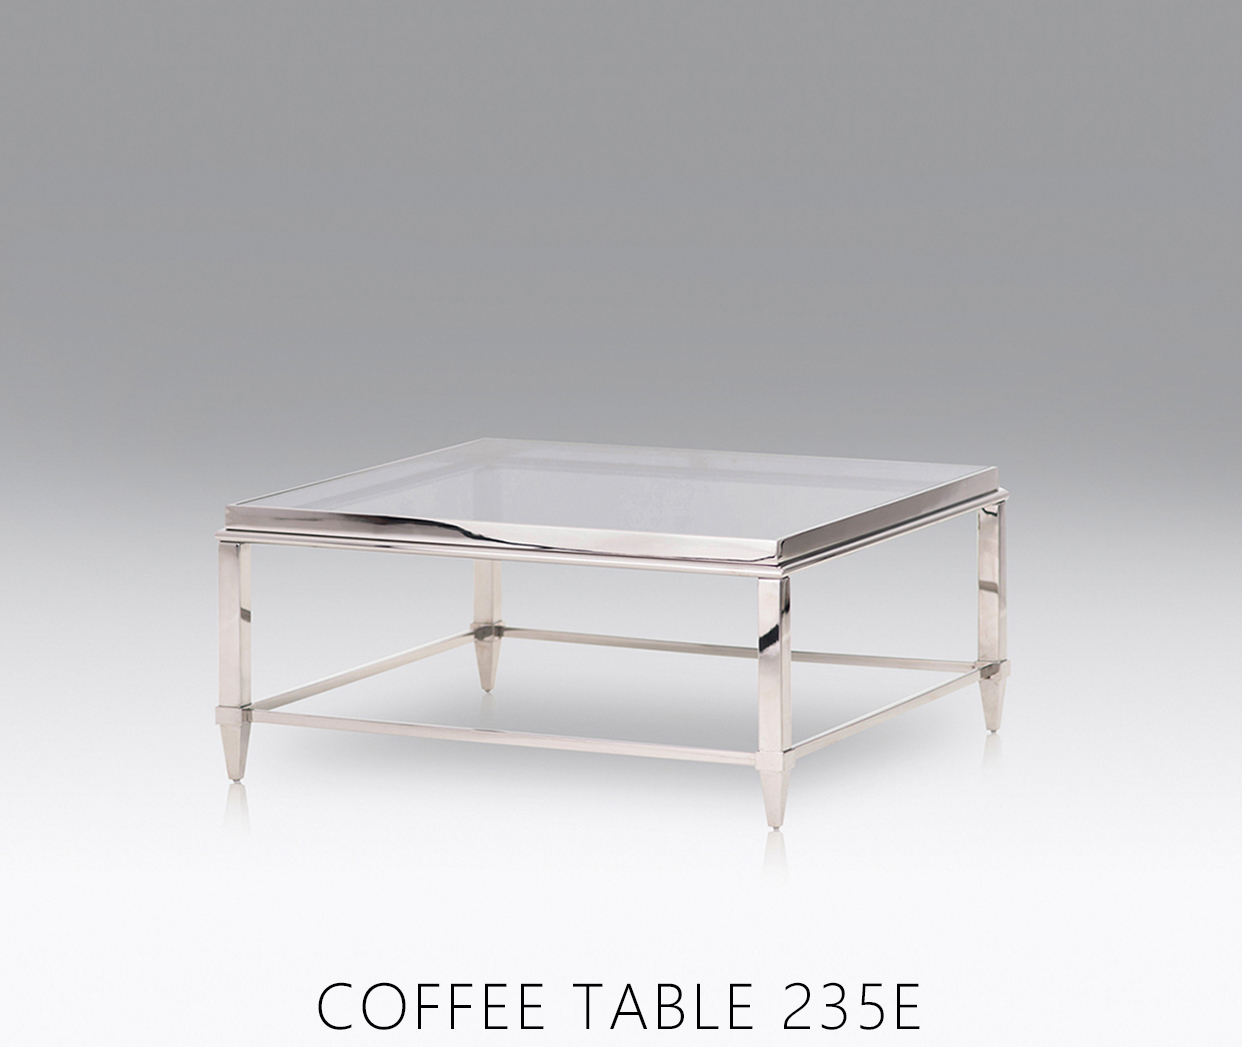 COFFEE TABLE 235E